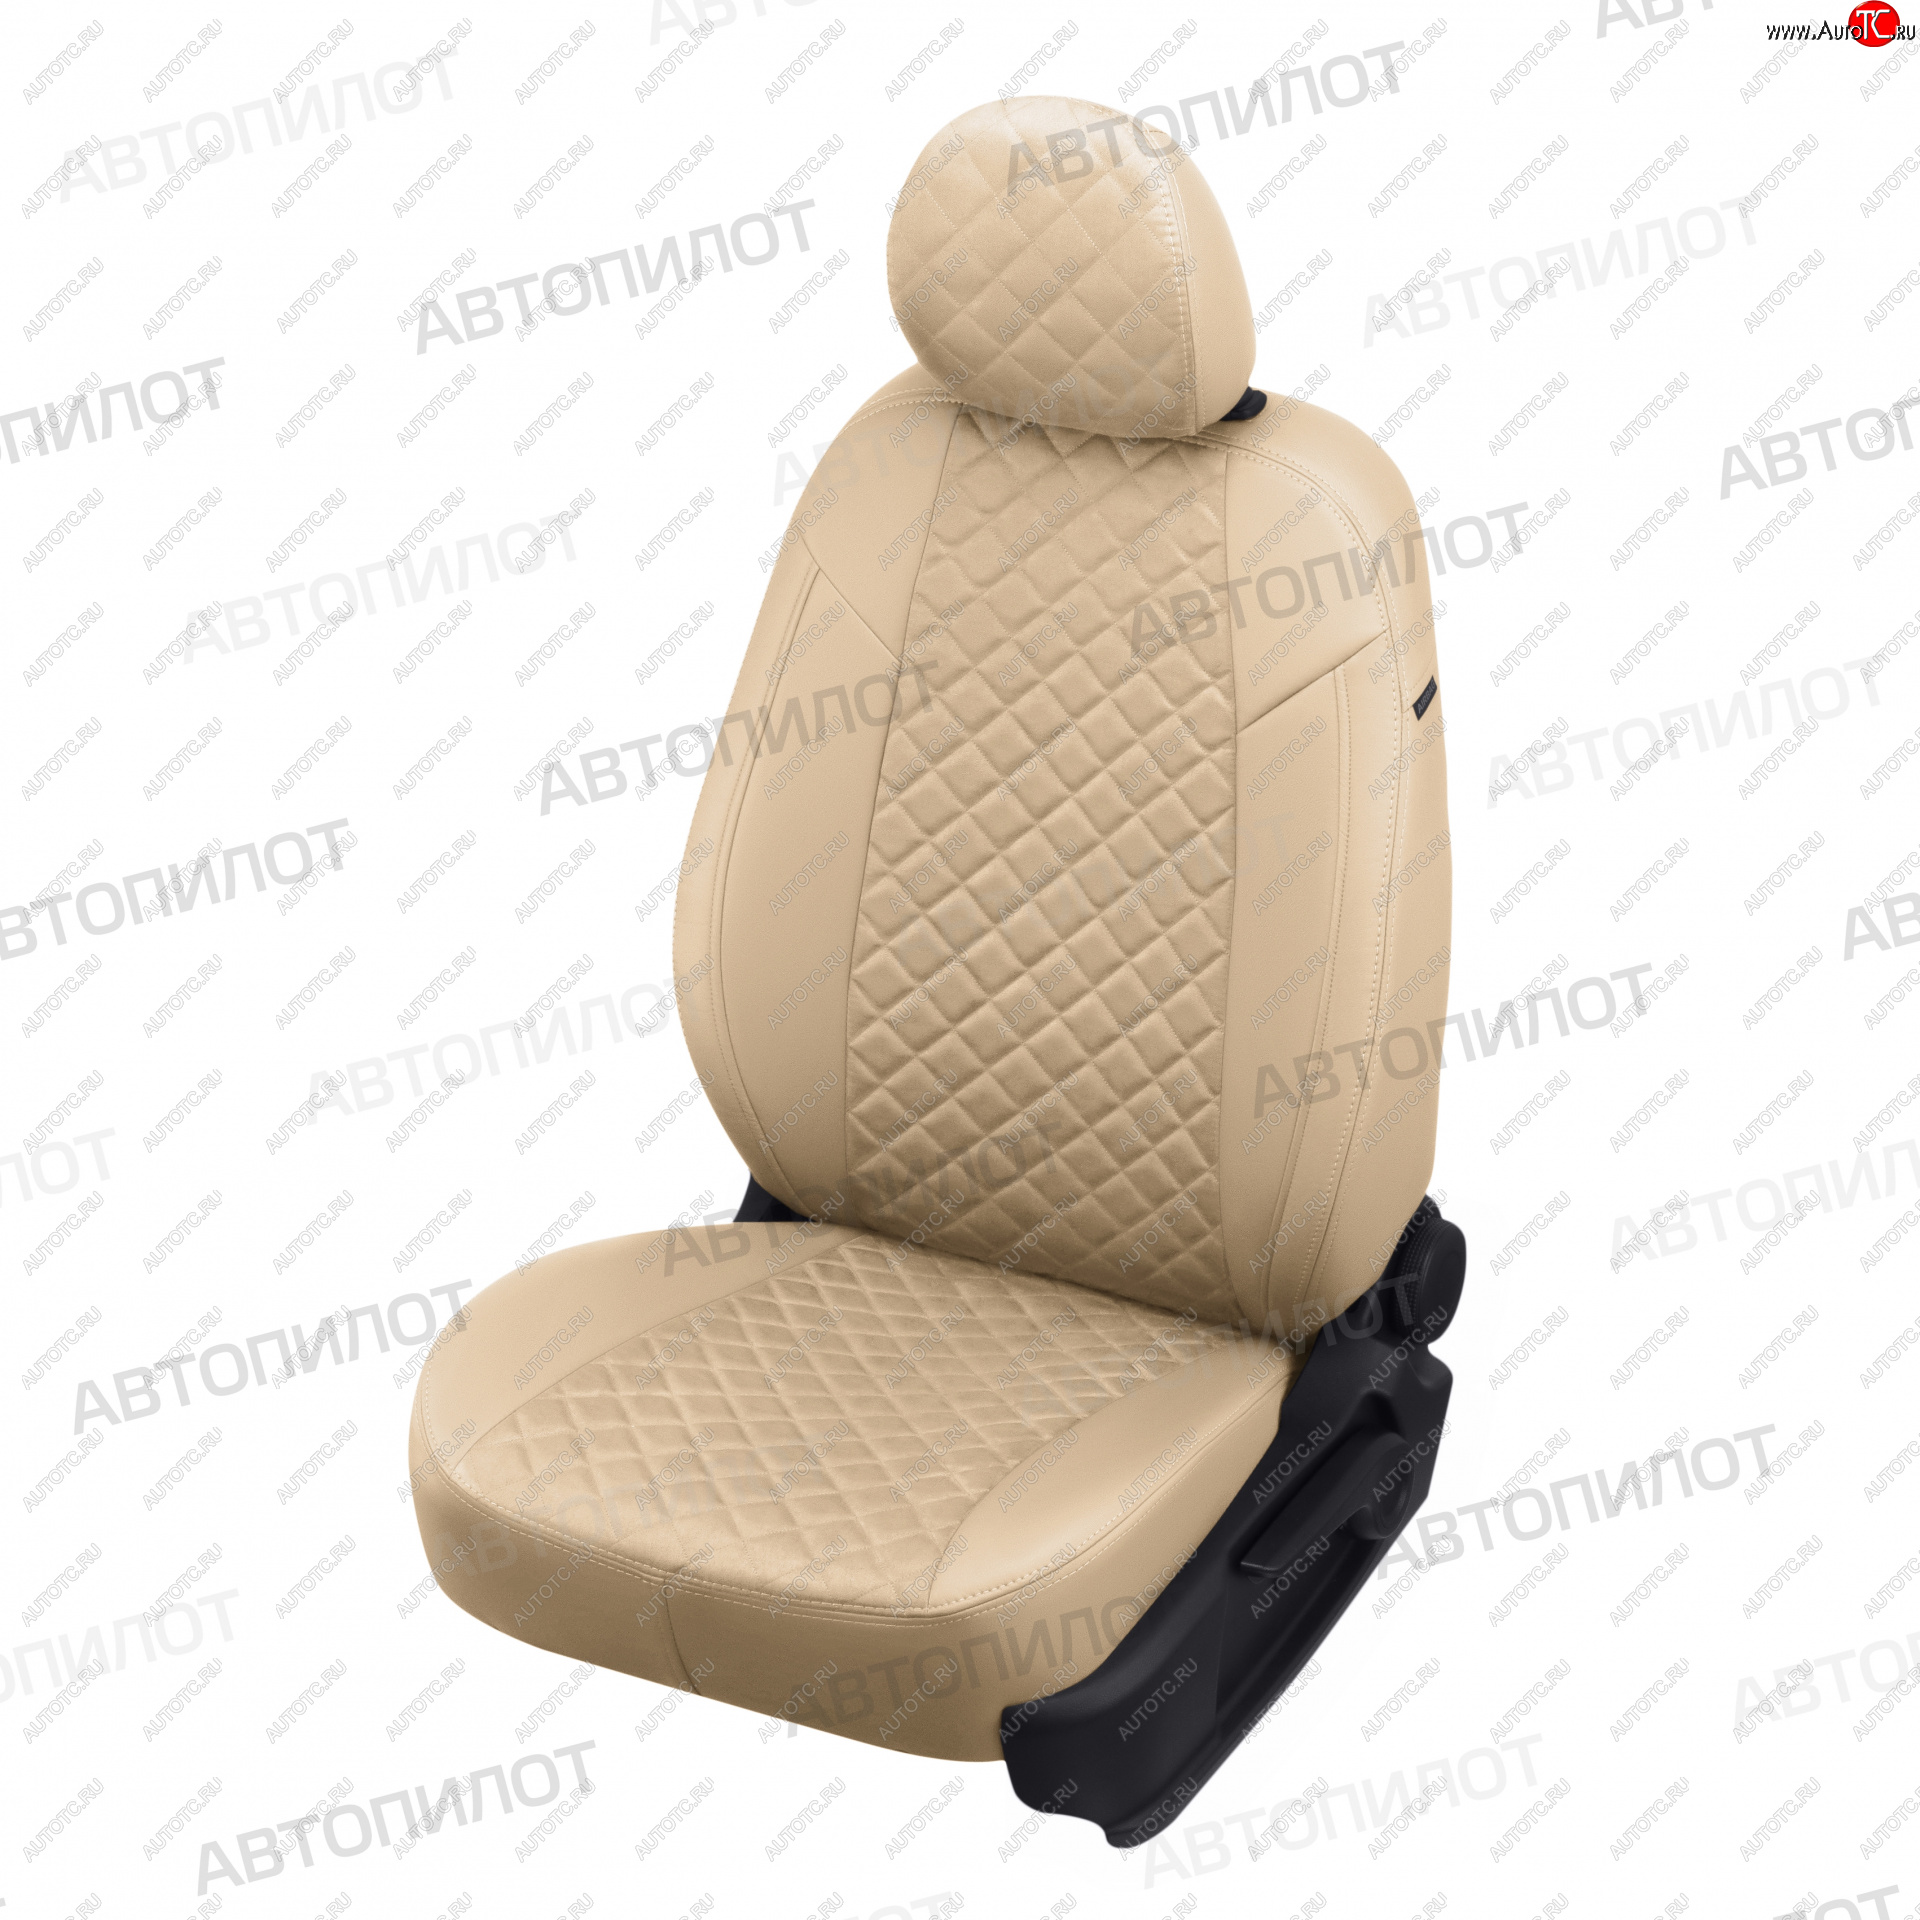 22 299 р. Чехлы сидений (9 мест, экокожа/алькантара) Автопилот Ромб  Ford Transit  3 (2006-2014) (бежевый)